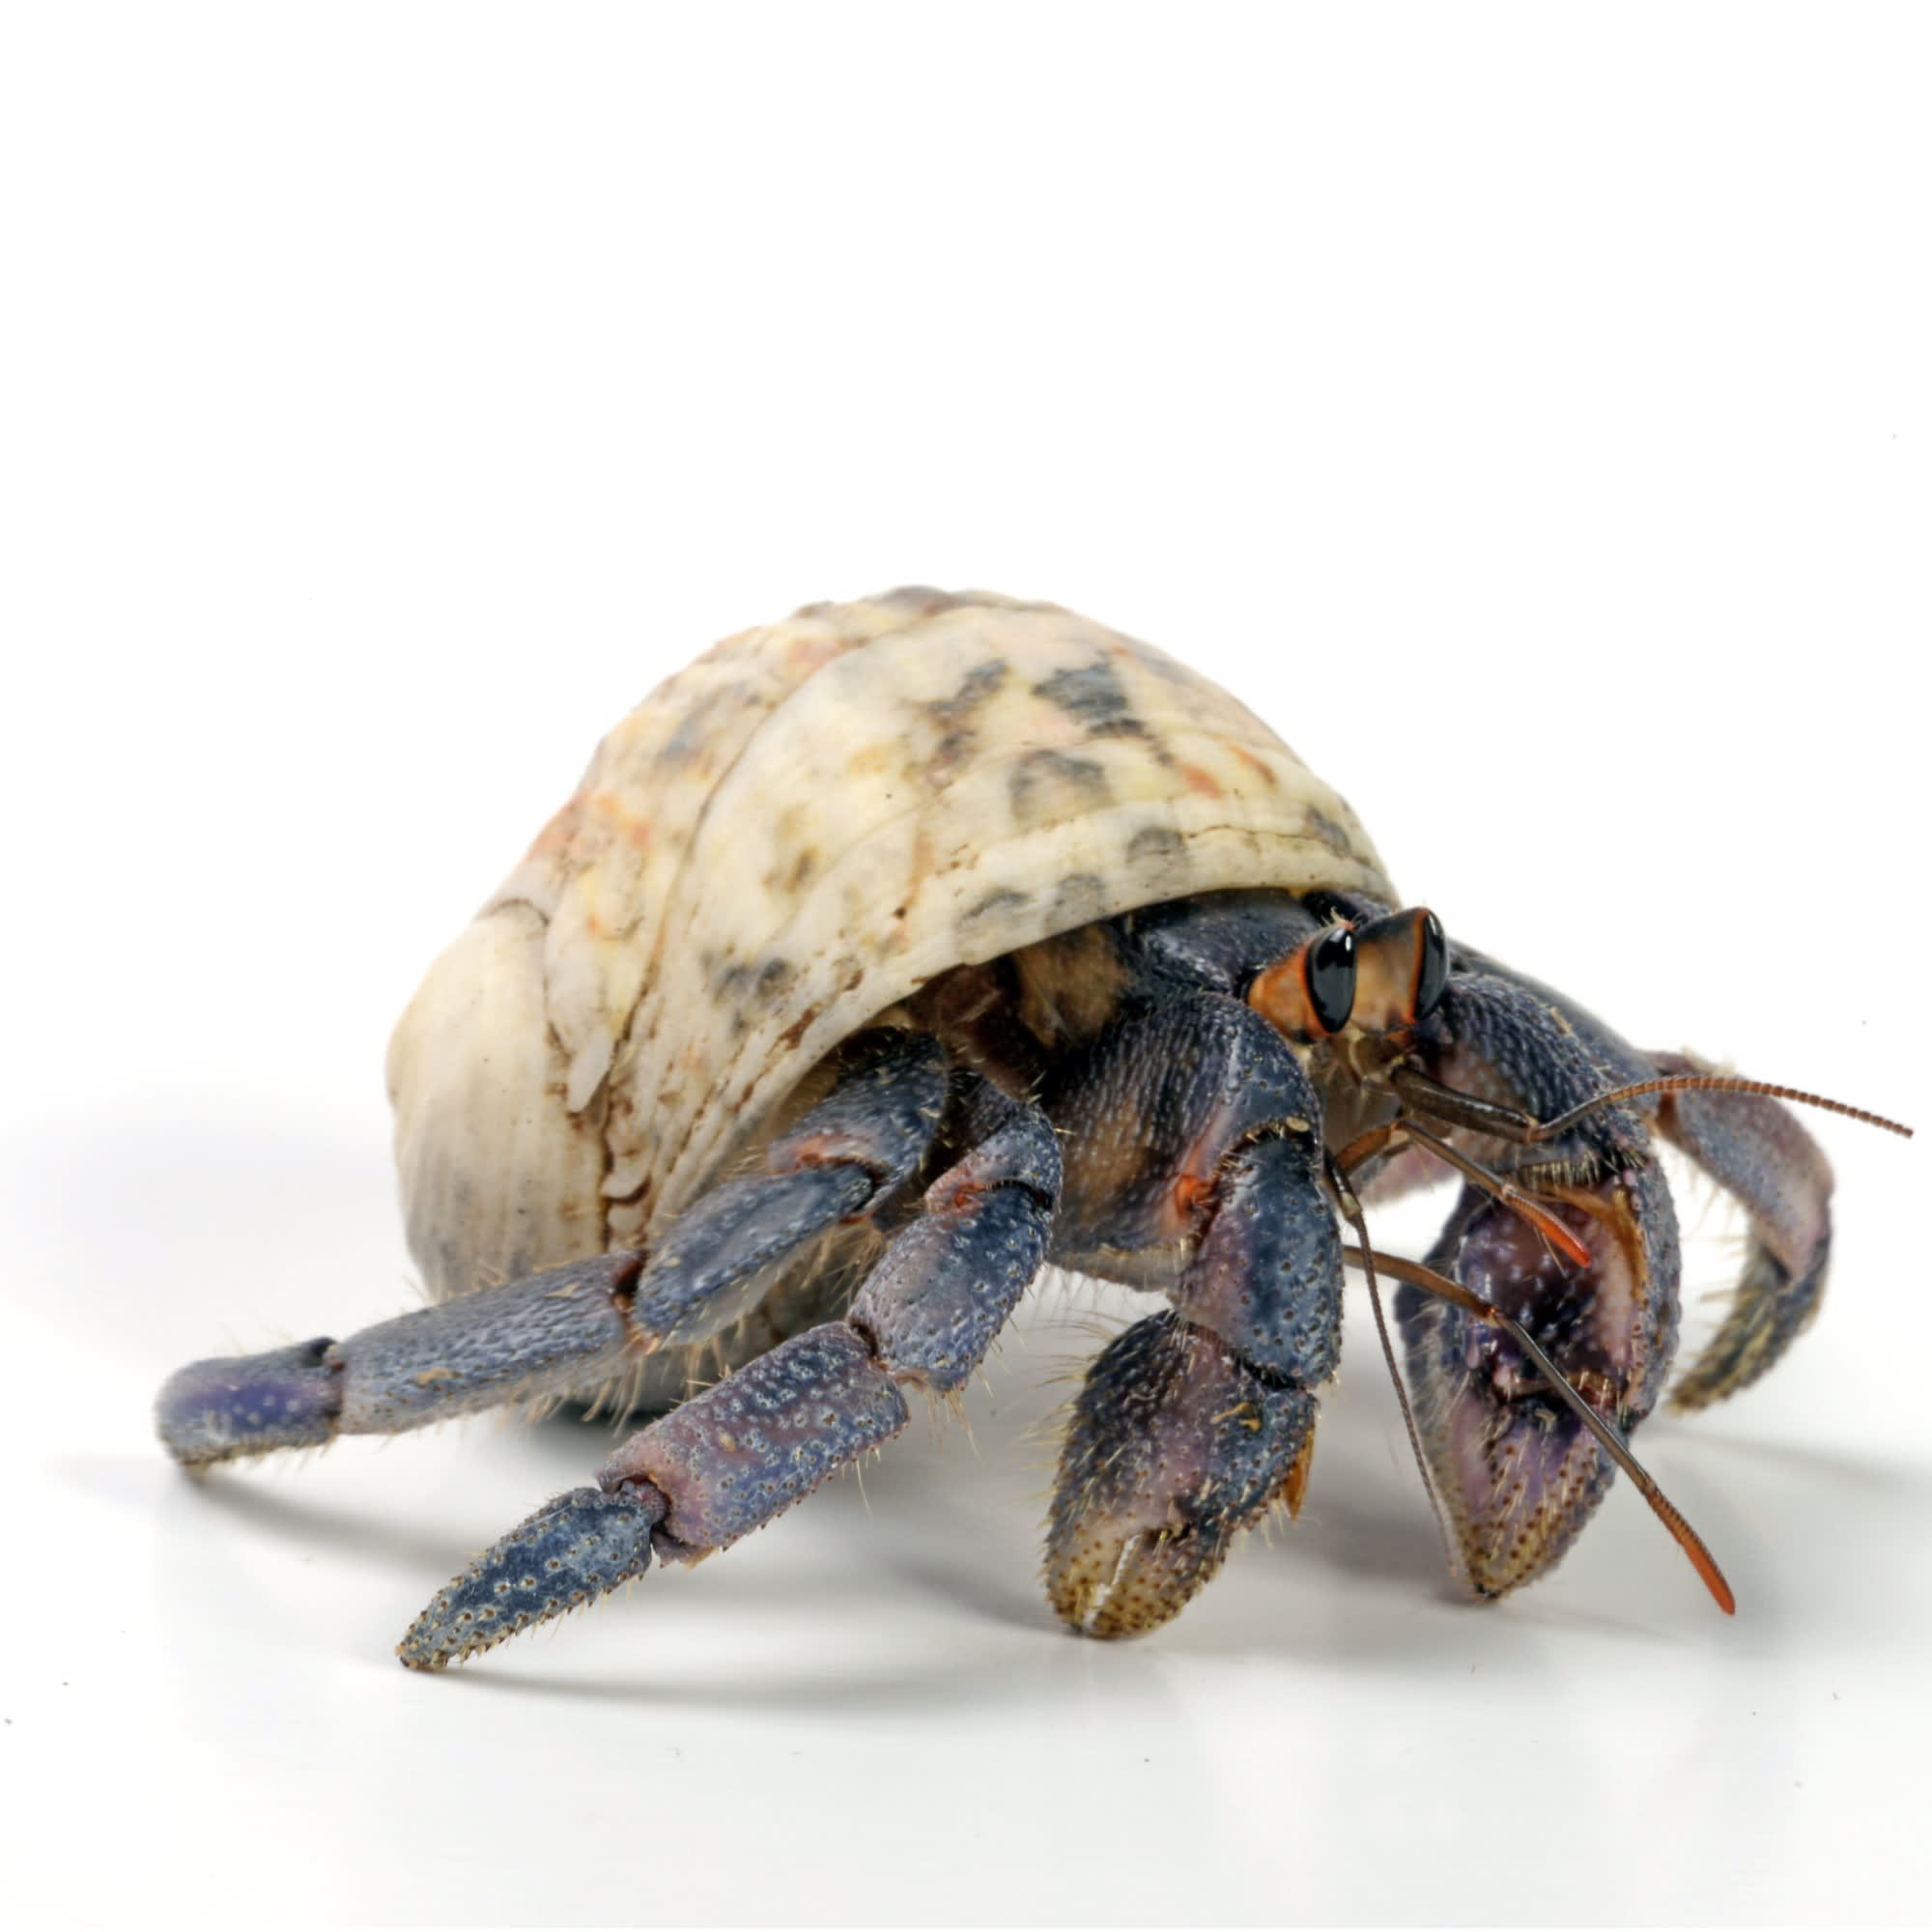 Hermit Crabs for Sale, Coenobita clypeatus